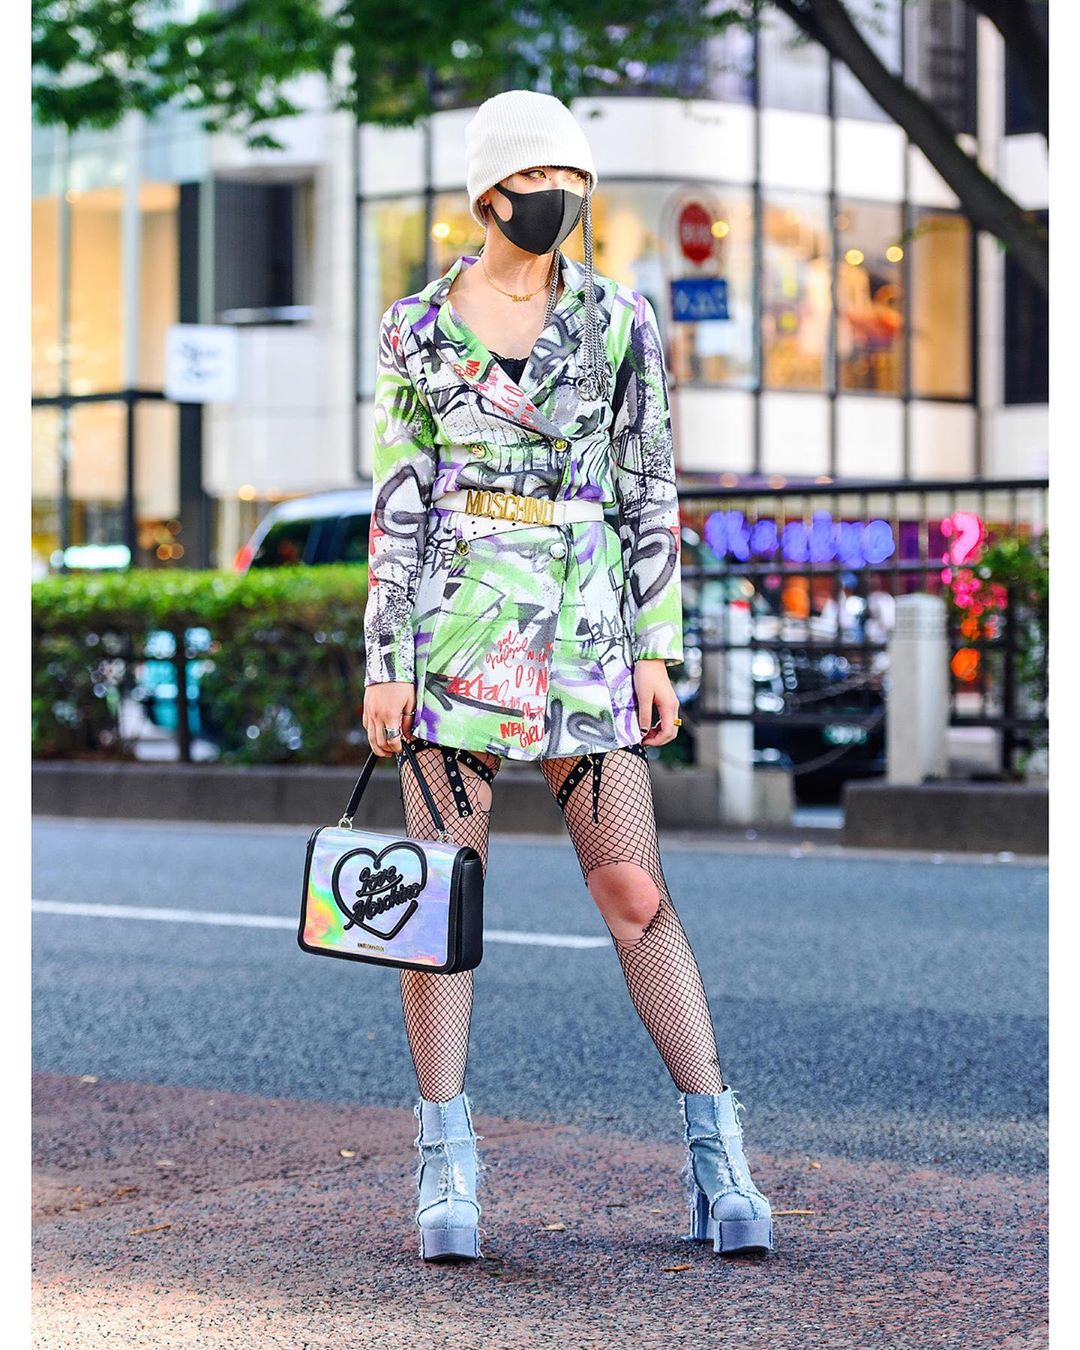 Tokyo Fashion 20 Year Old Japanese Apparel Industry Staffer Haruka